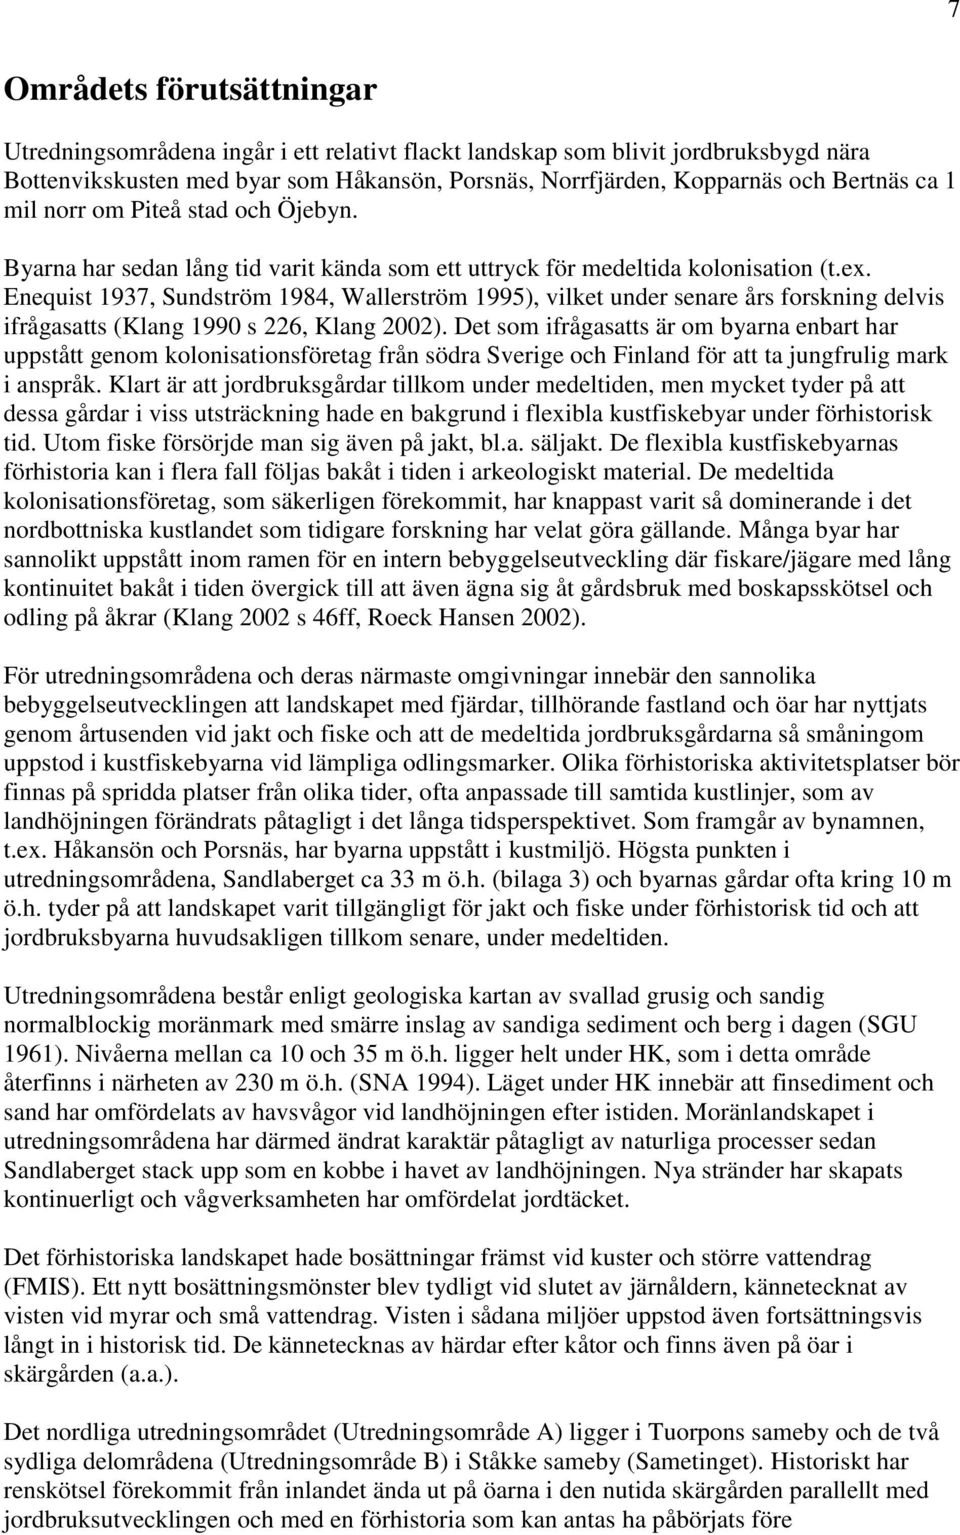 Enequist 1937, Sundström 1984, Wallerström 1995), vilket under senare års forskning delvis ifrågasatts (Klang 1990 s 226, Klang 2002).